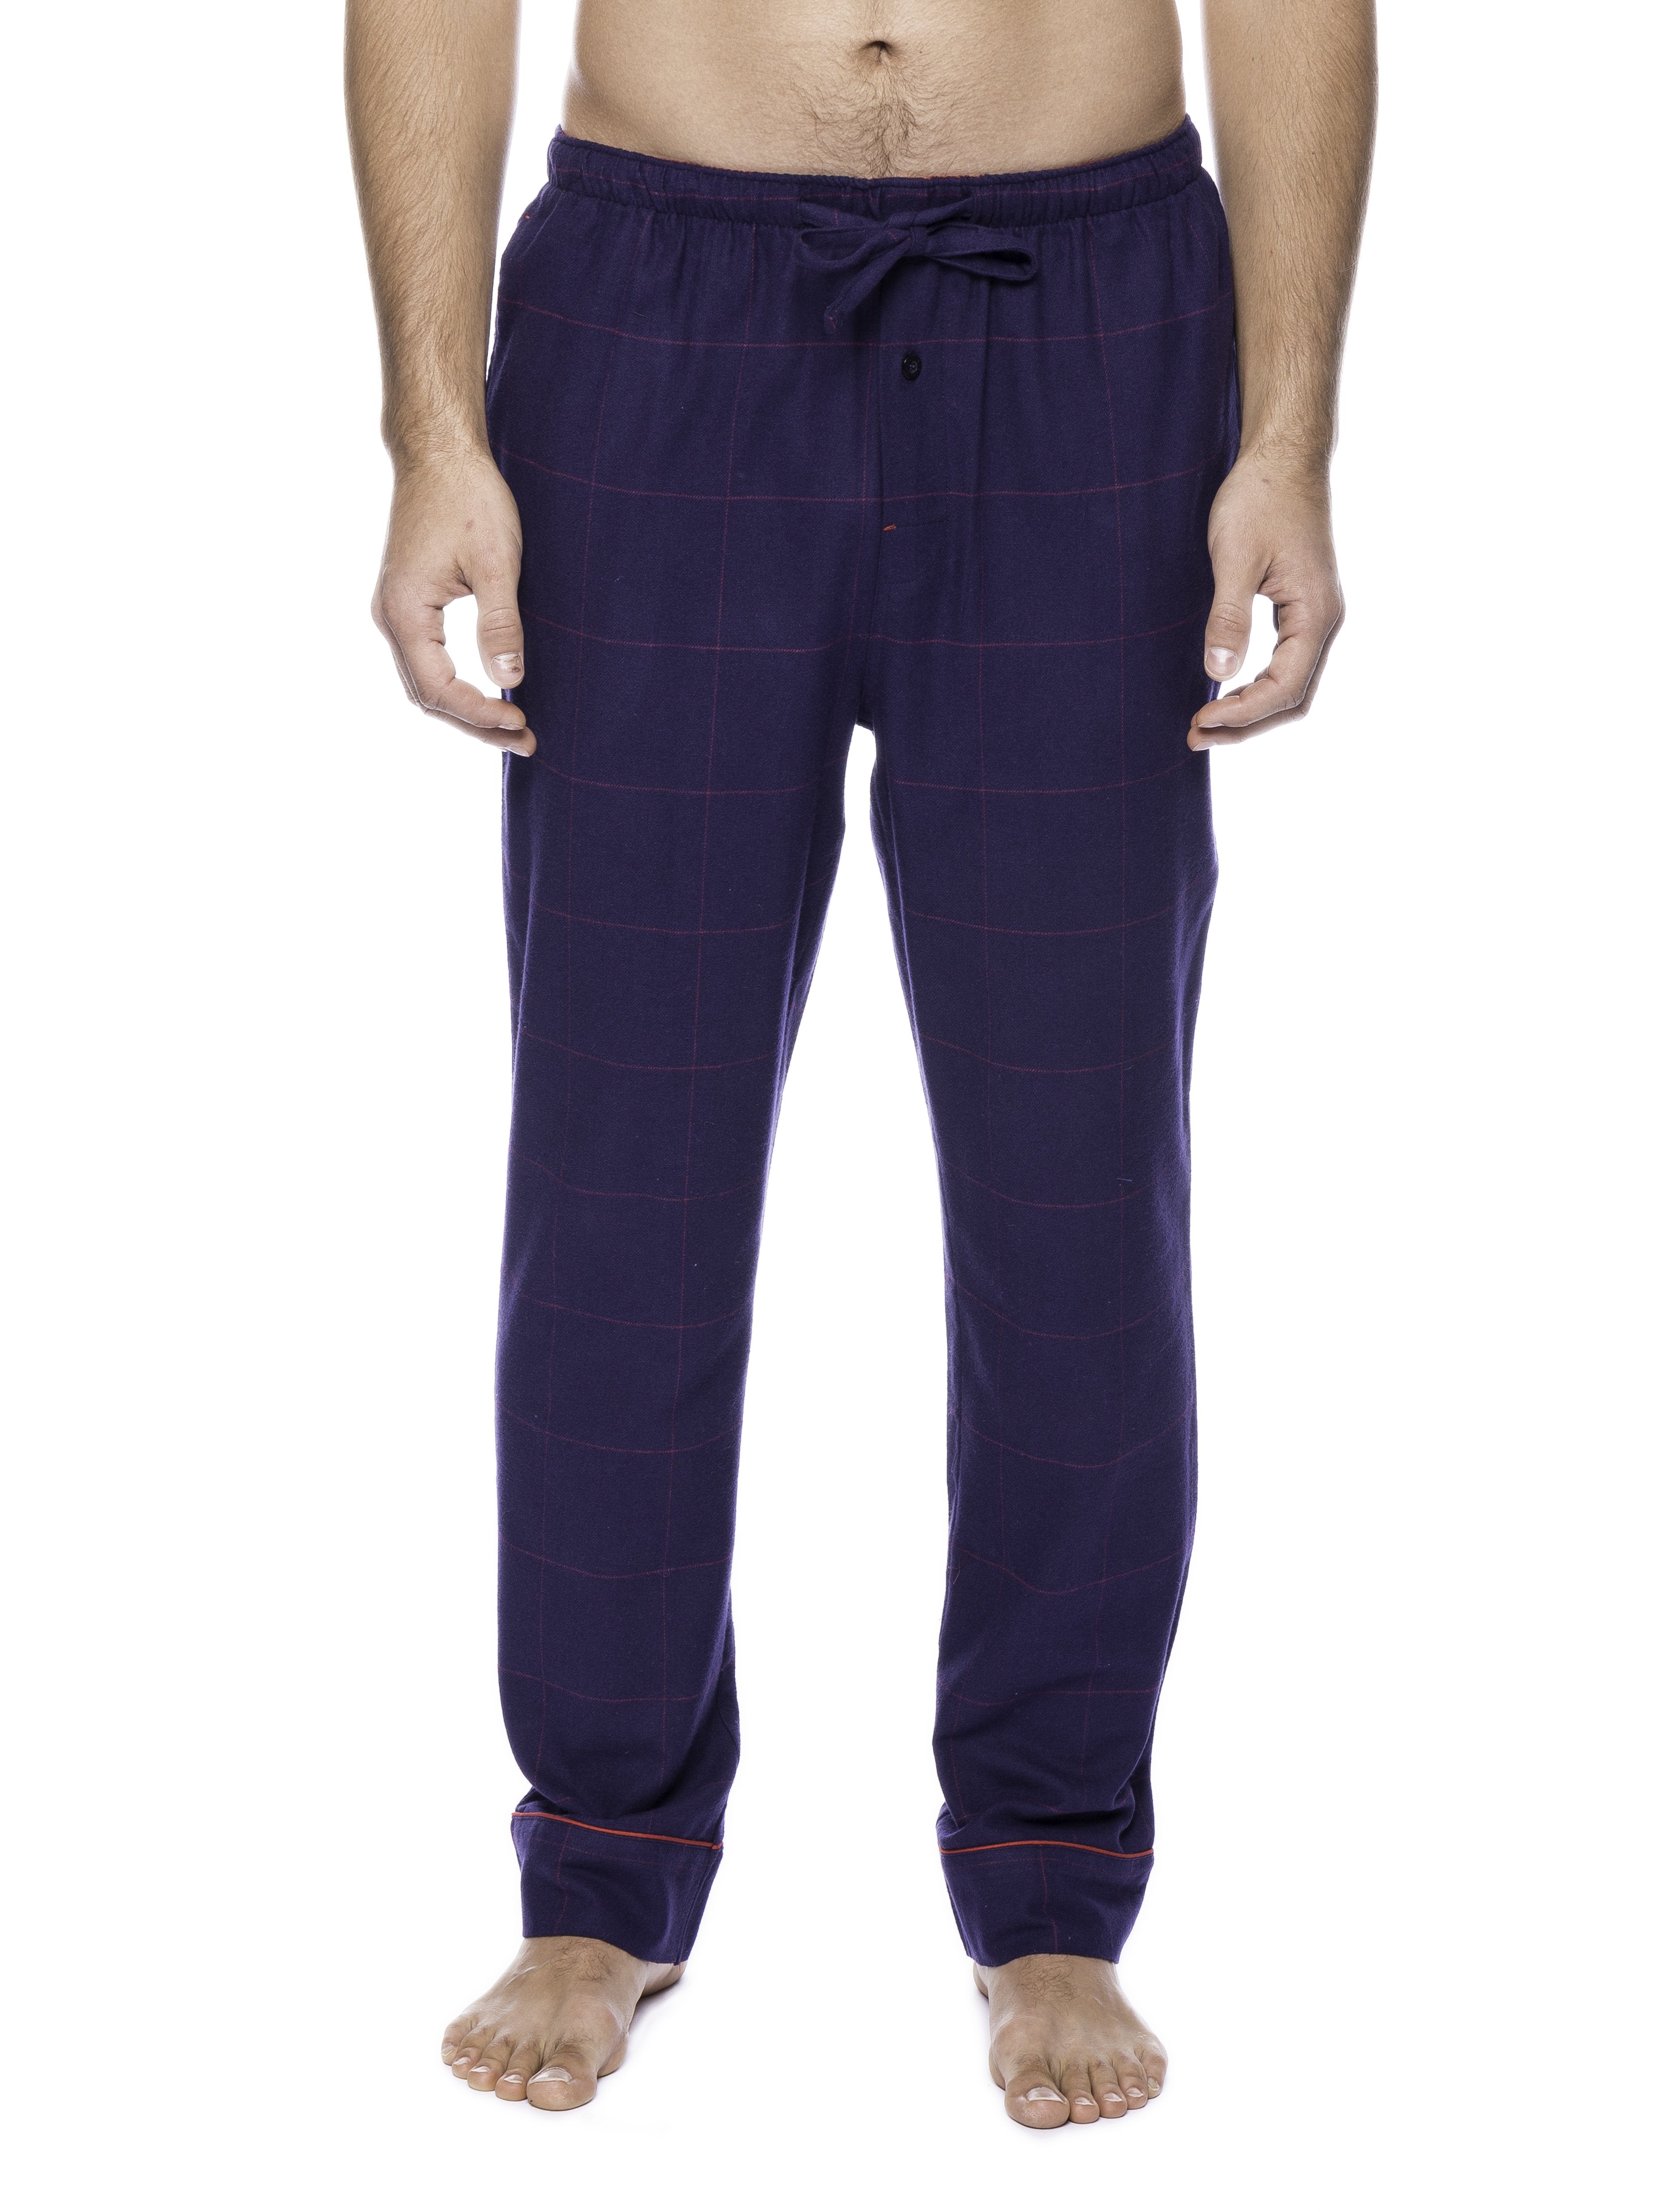 Mens Gingham 100% Cotton Flannel Lounge Pants - Windowpane Checks Blue/Red